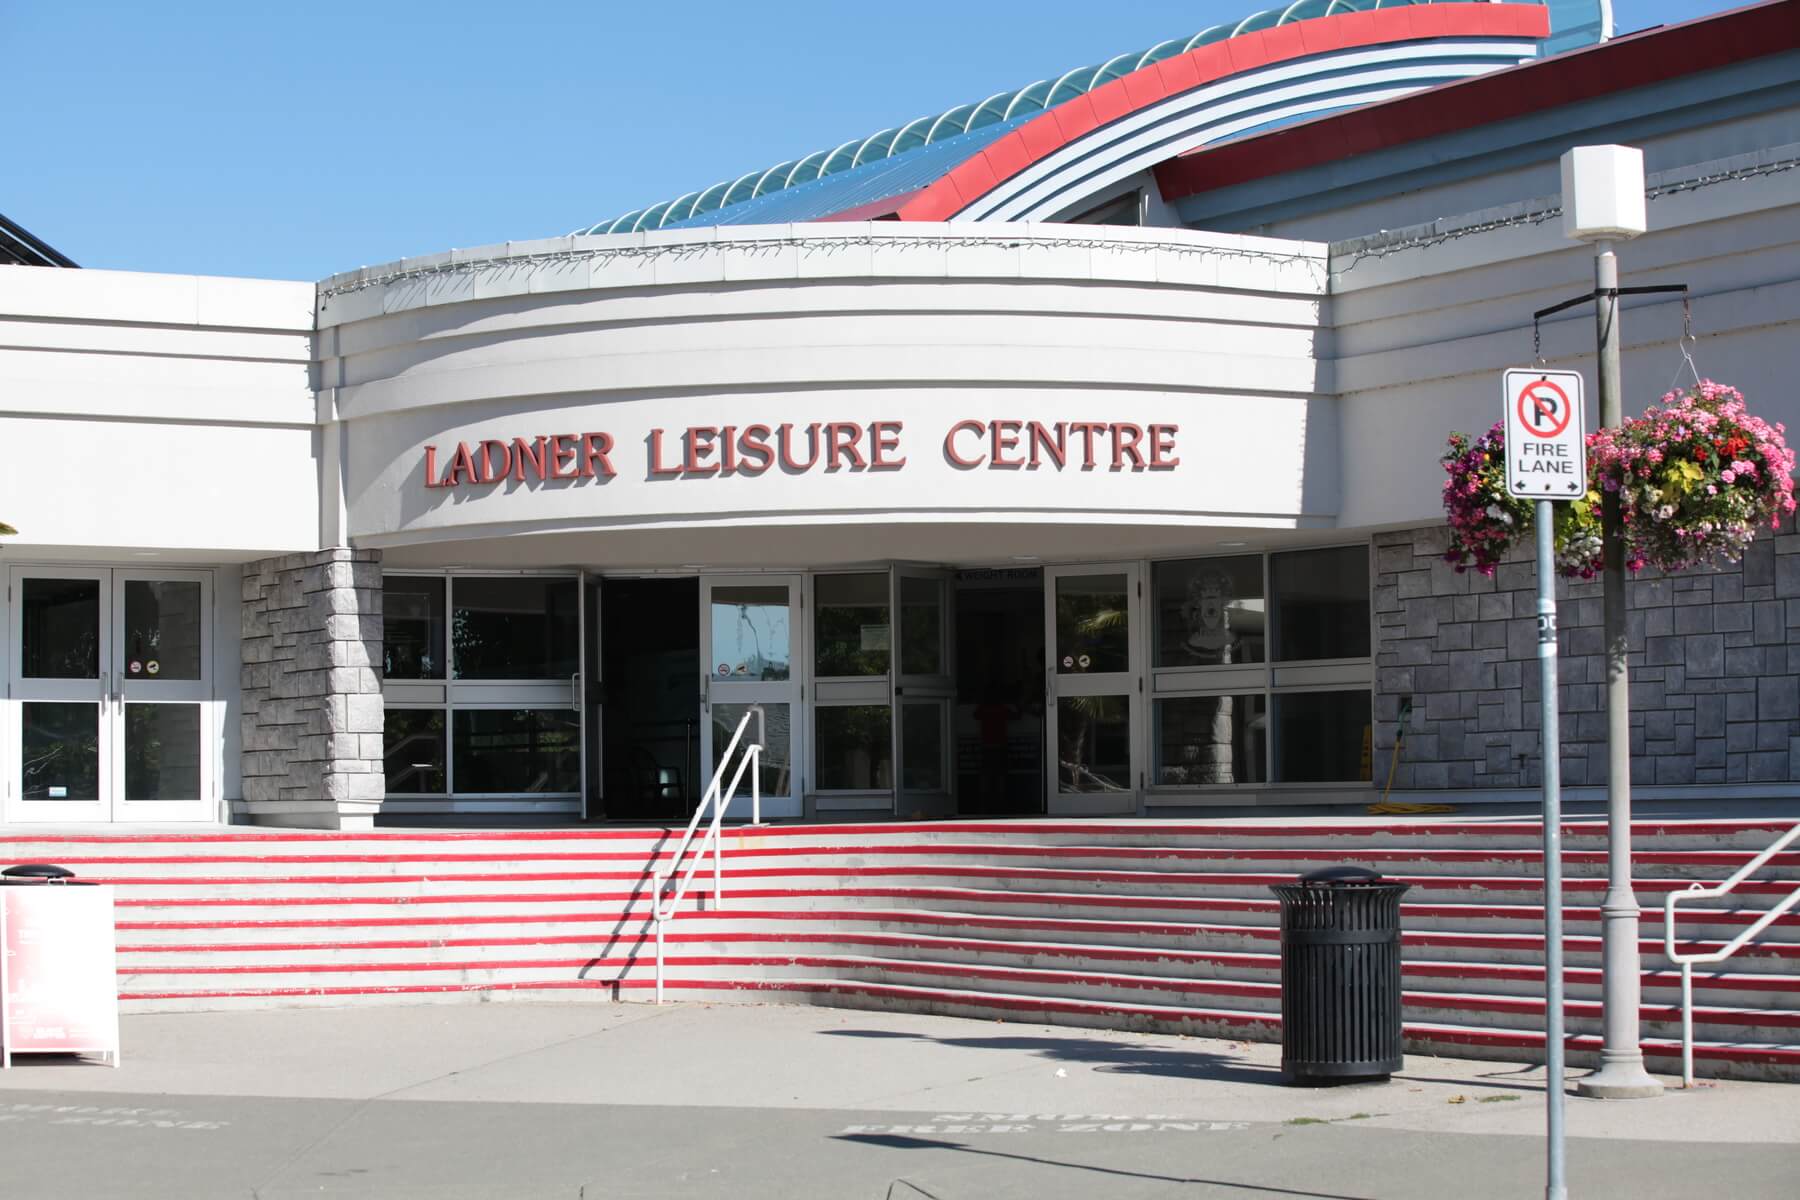 Ladner Leisure Centre